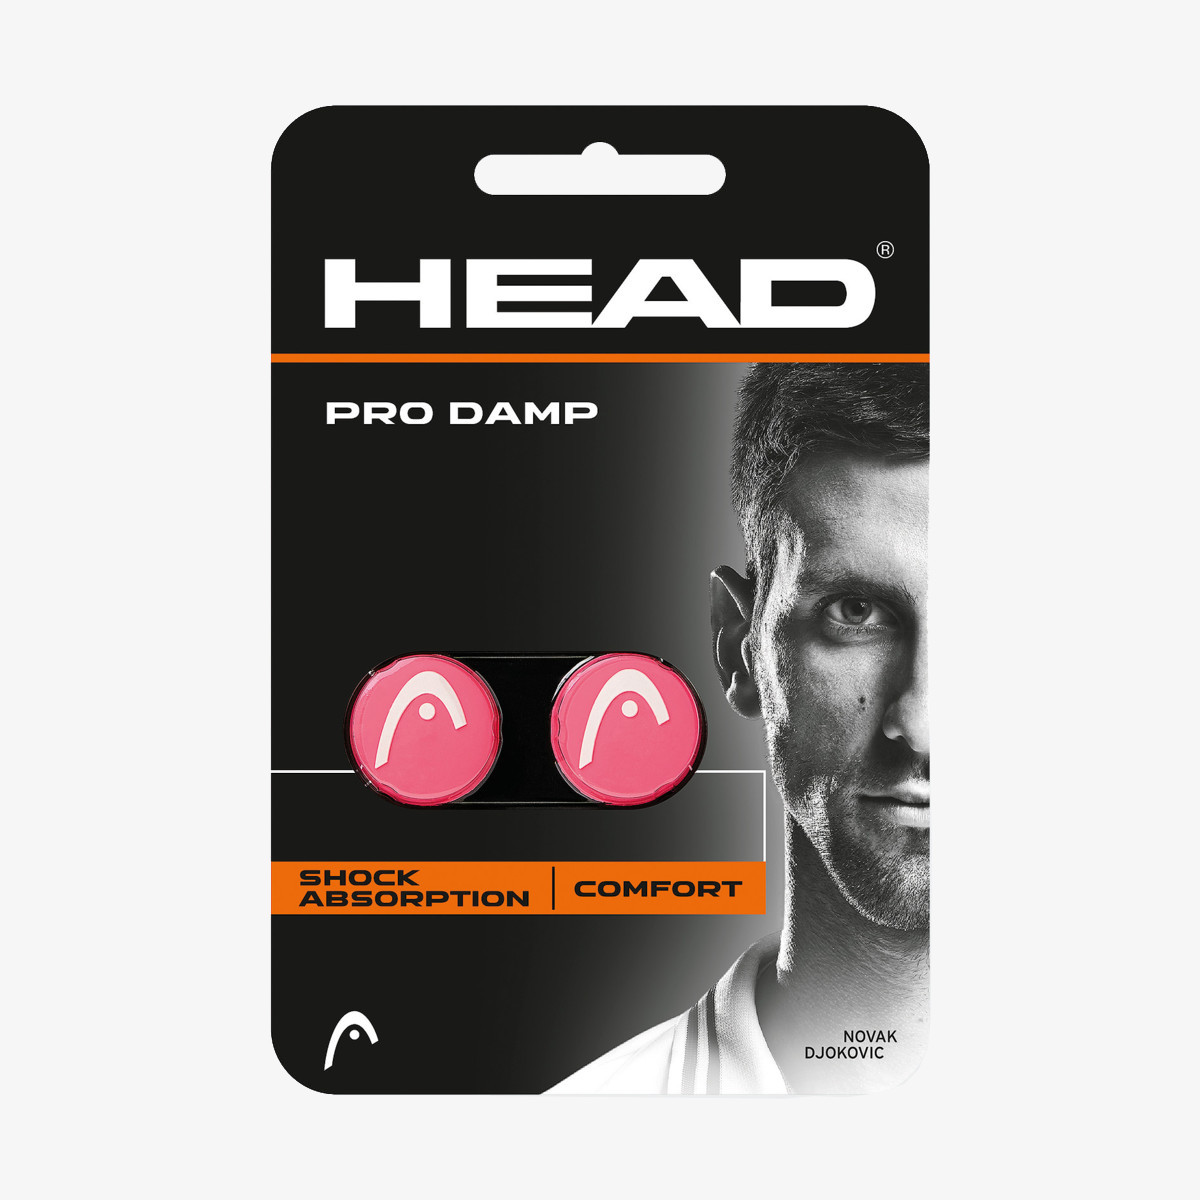 Head Pro Damp Vibrostop 